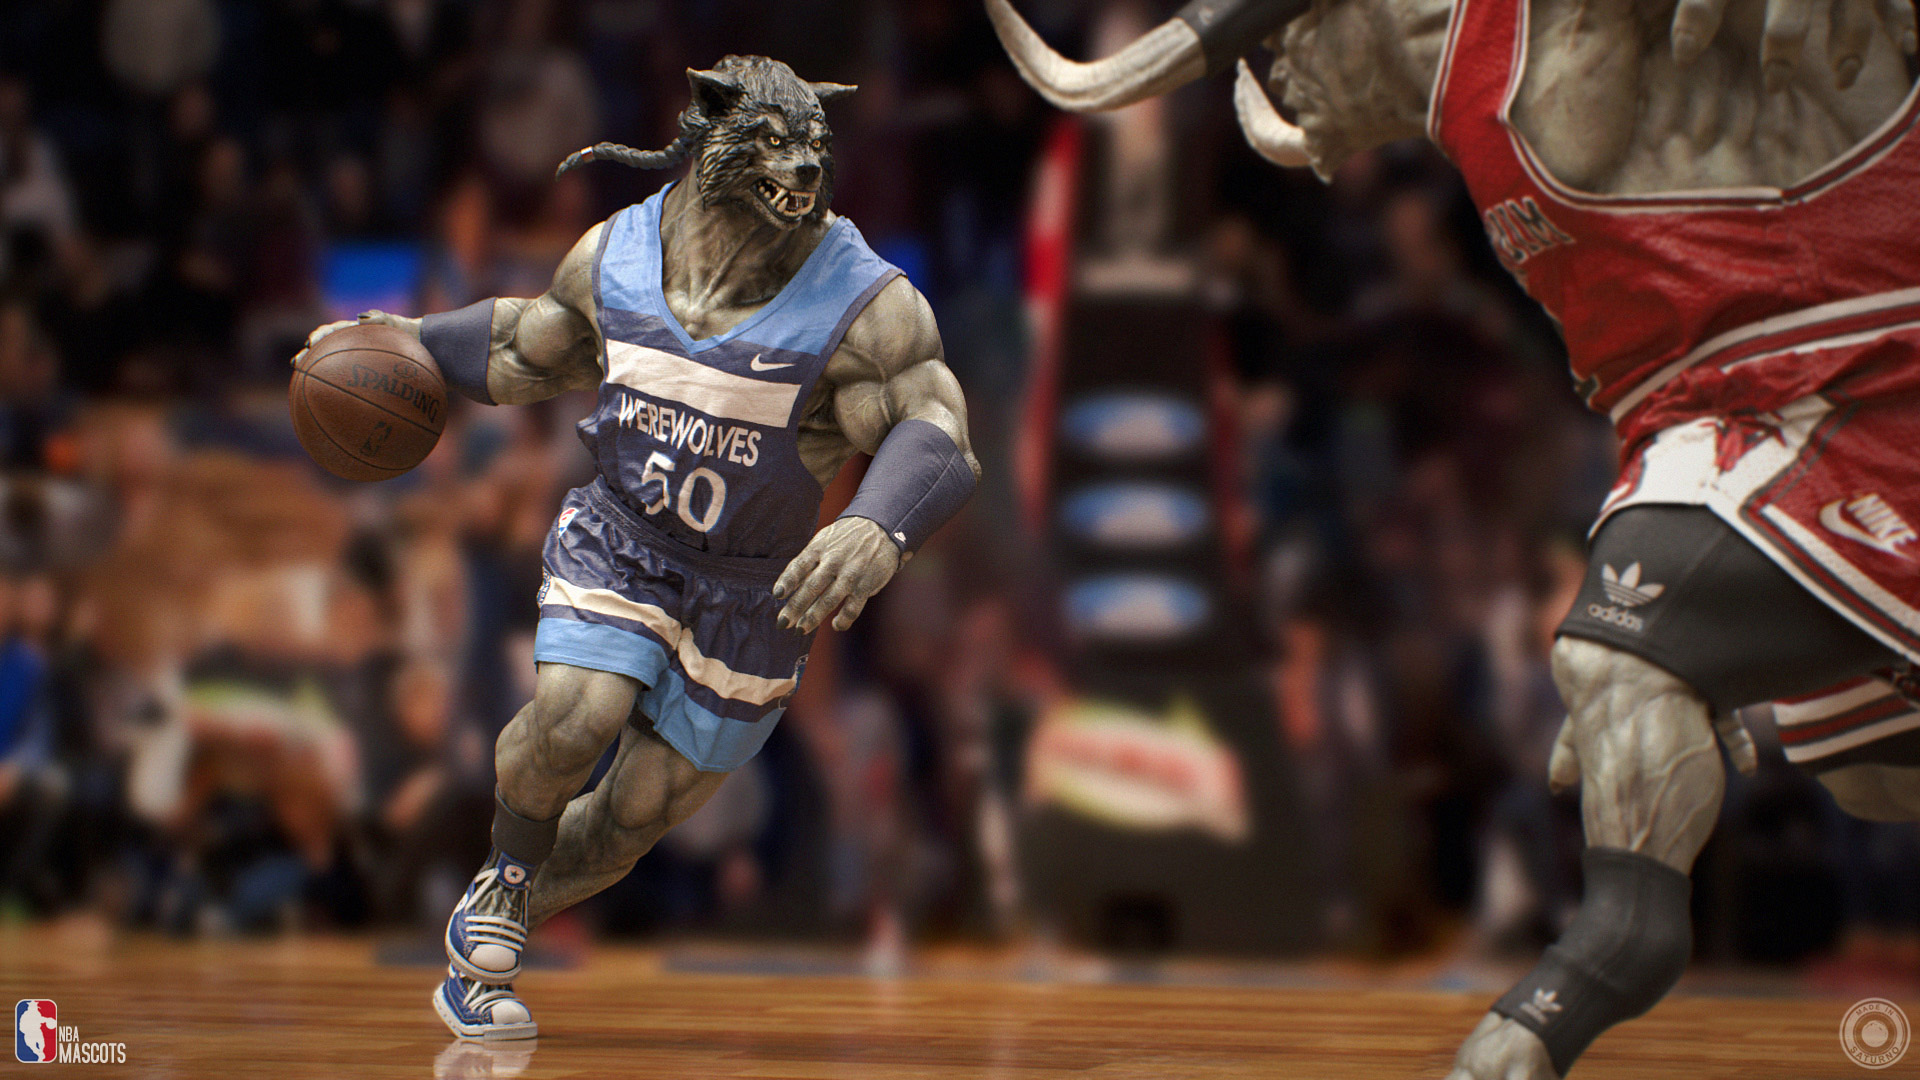 General 1920x1080 sport basketball creature NBA Minotaur werewolves Chicago Bulls Minnesota Timberwolves mythology watermarked digital art